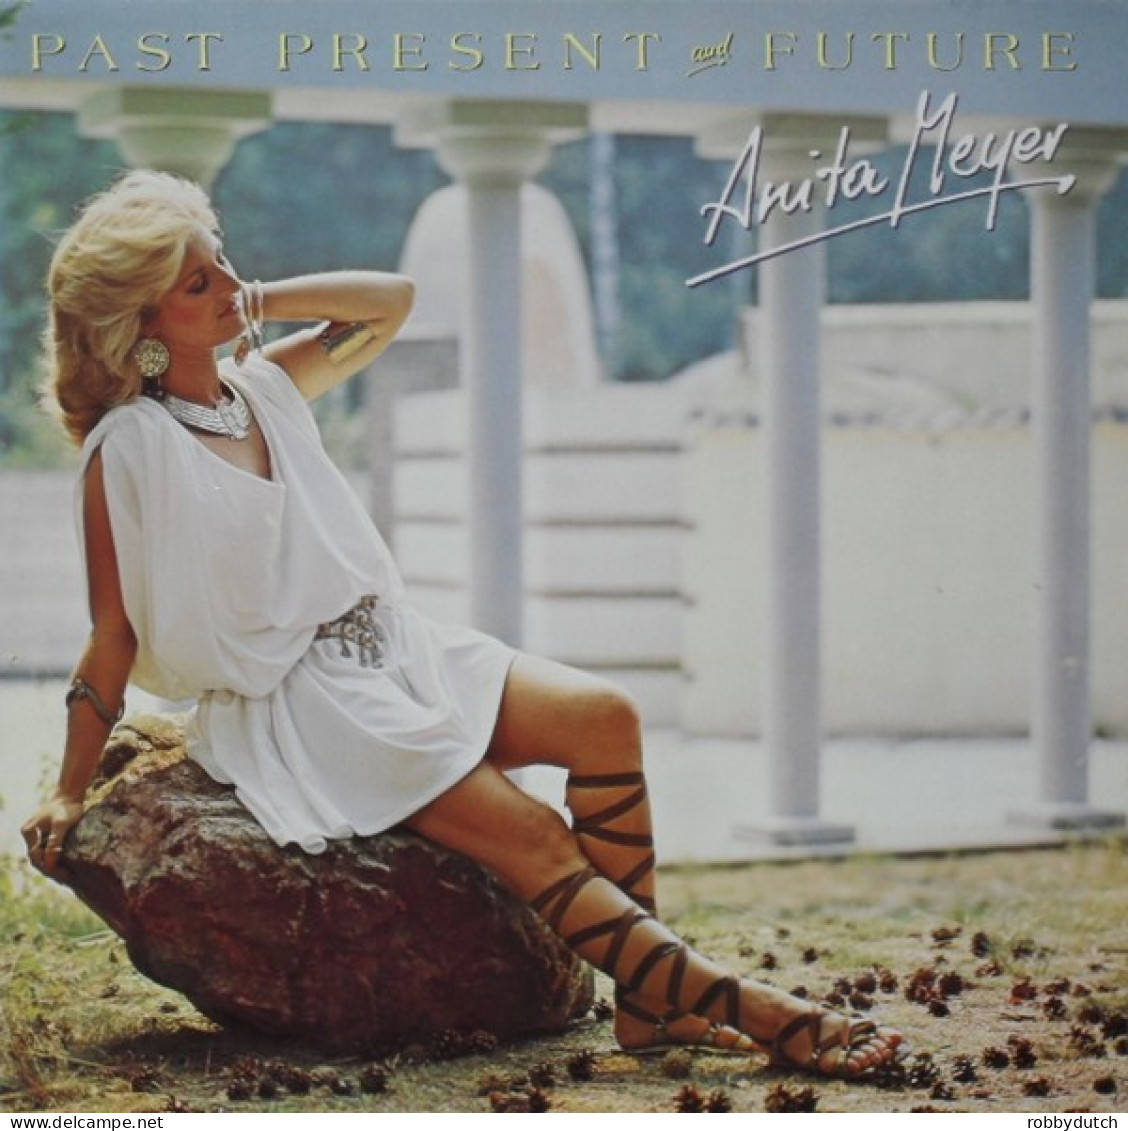 * LP *  ANITA MEYER - PAST, PRESENT AND FUTURE (Europe 1982 EX) - Disco, Pop